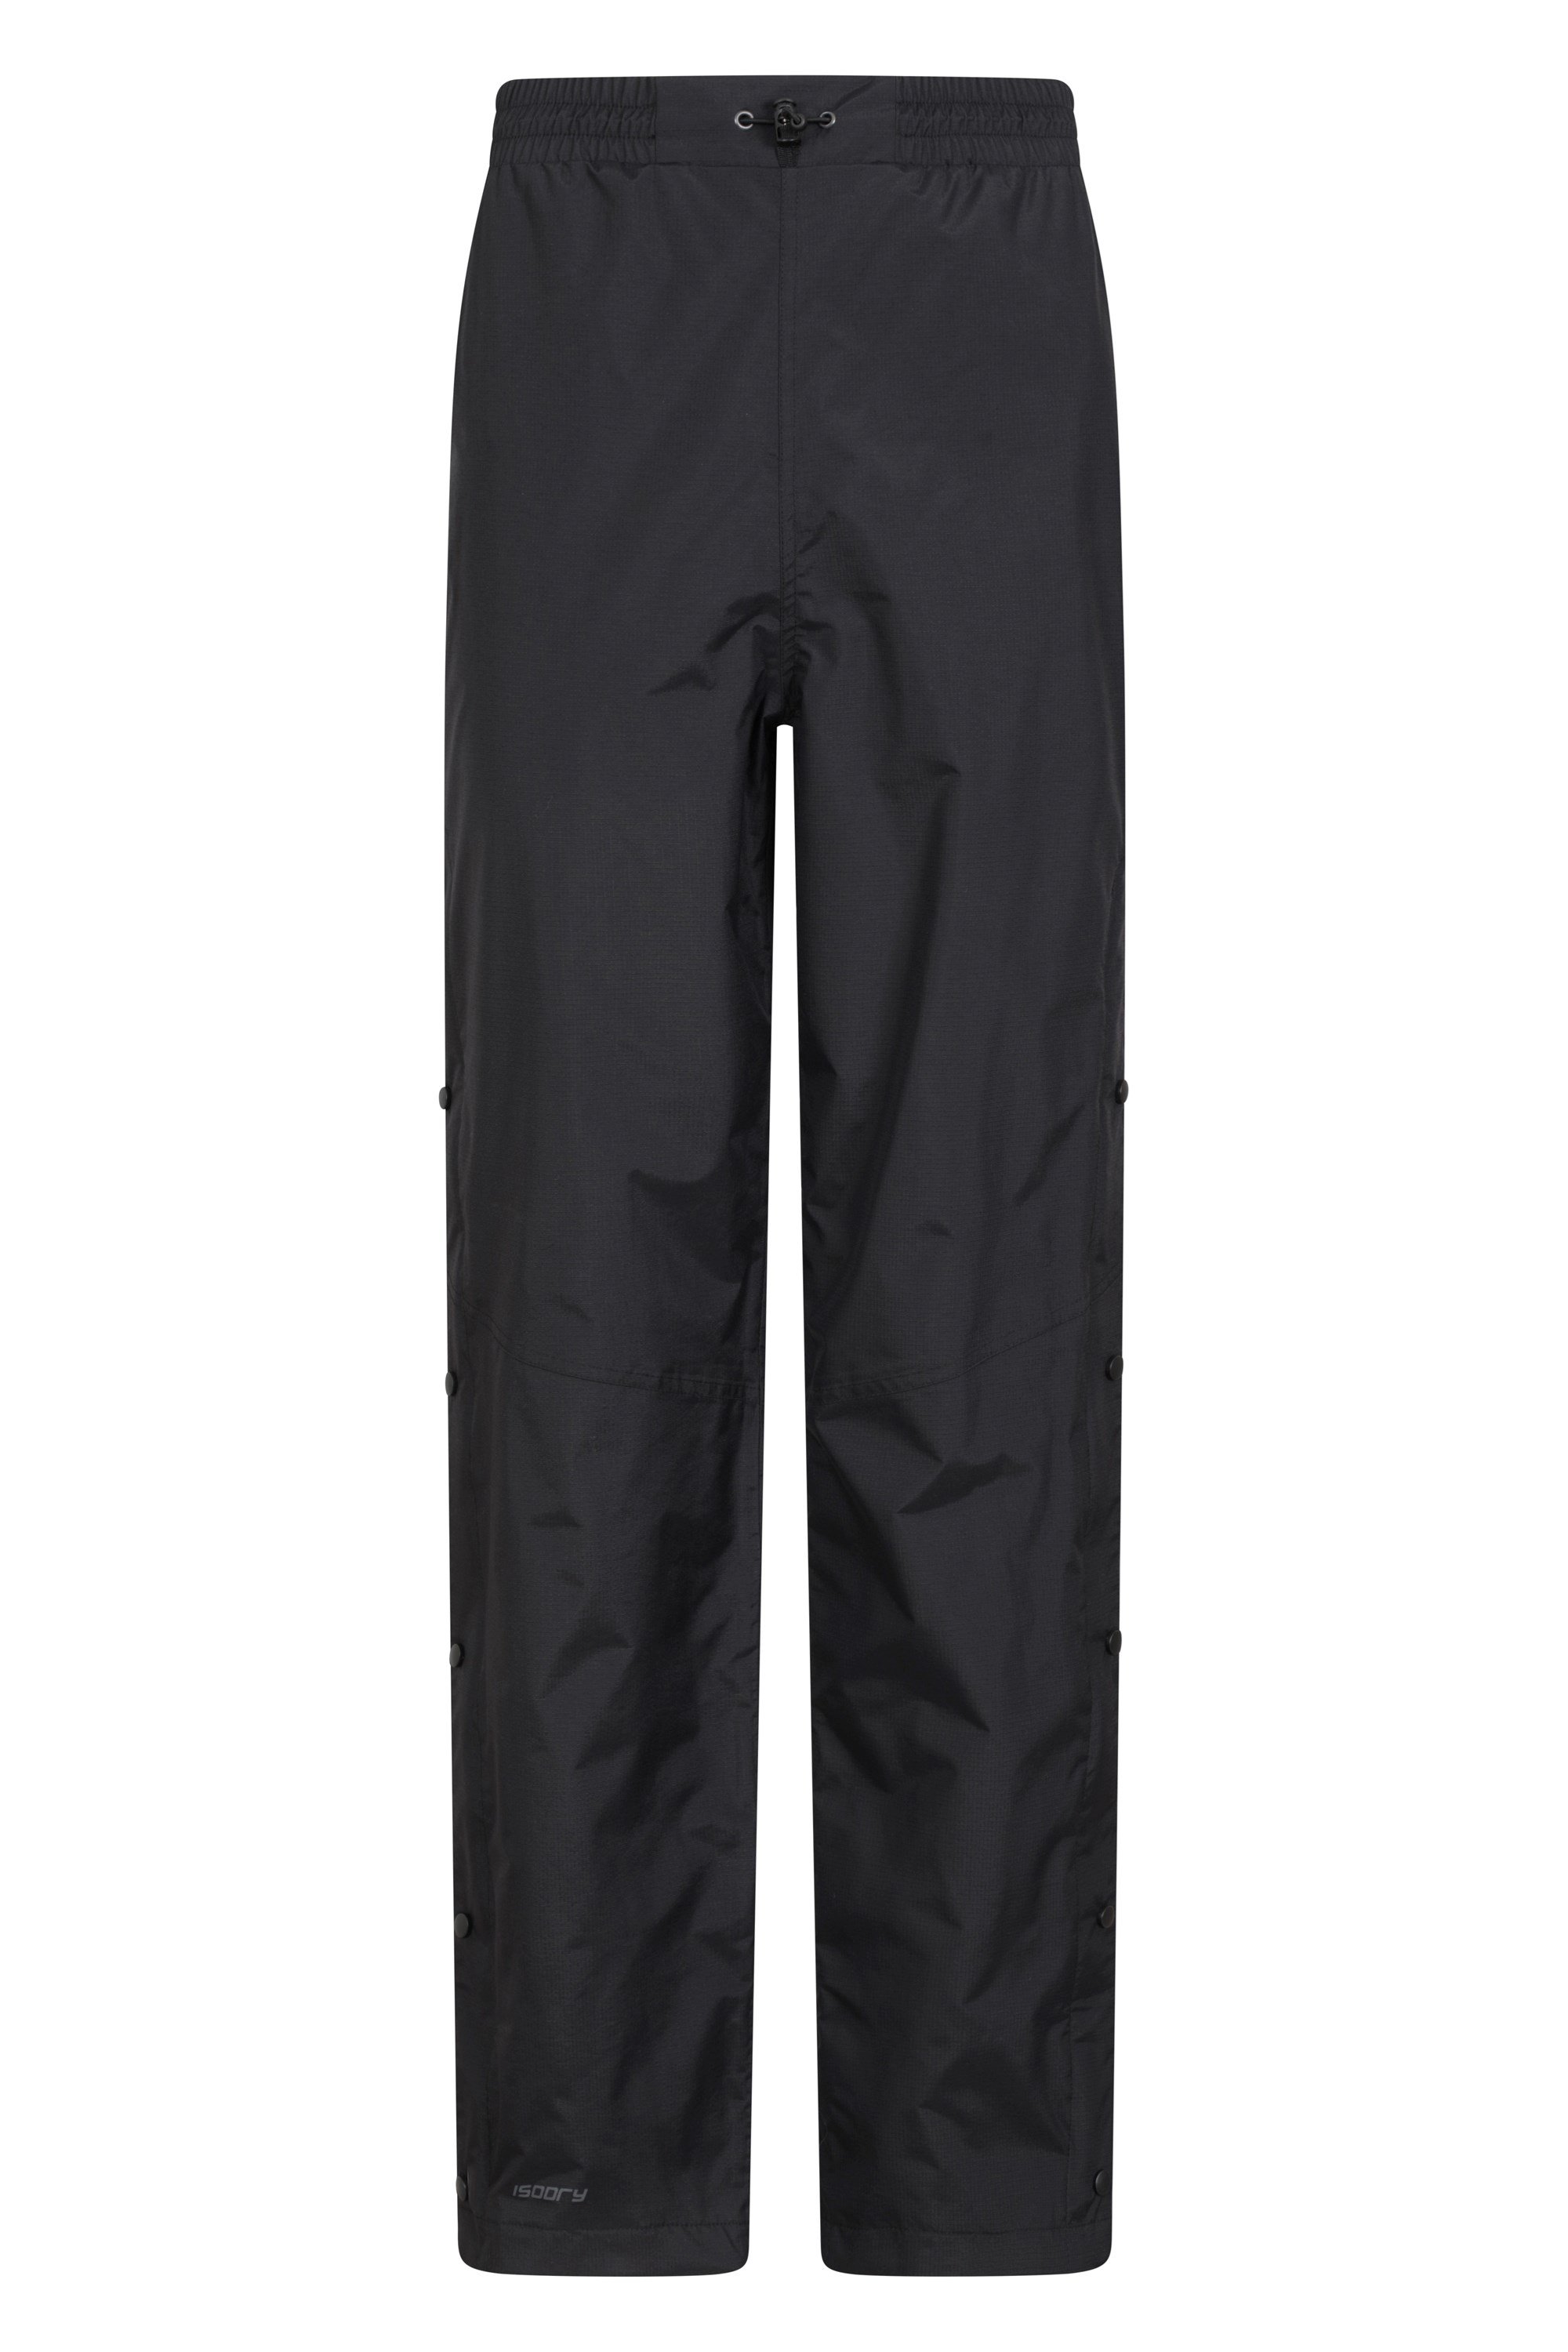 Downpour Mens Waterproof Trousers Long Length - Black